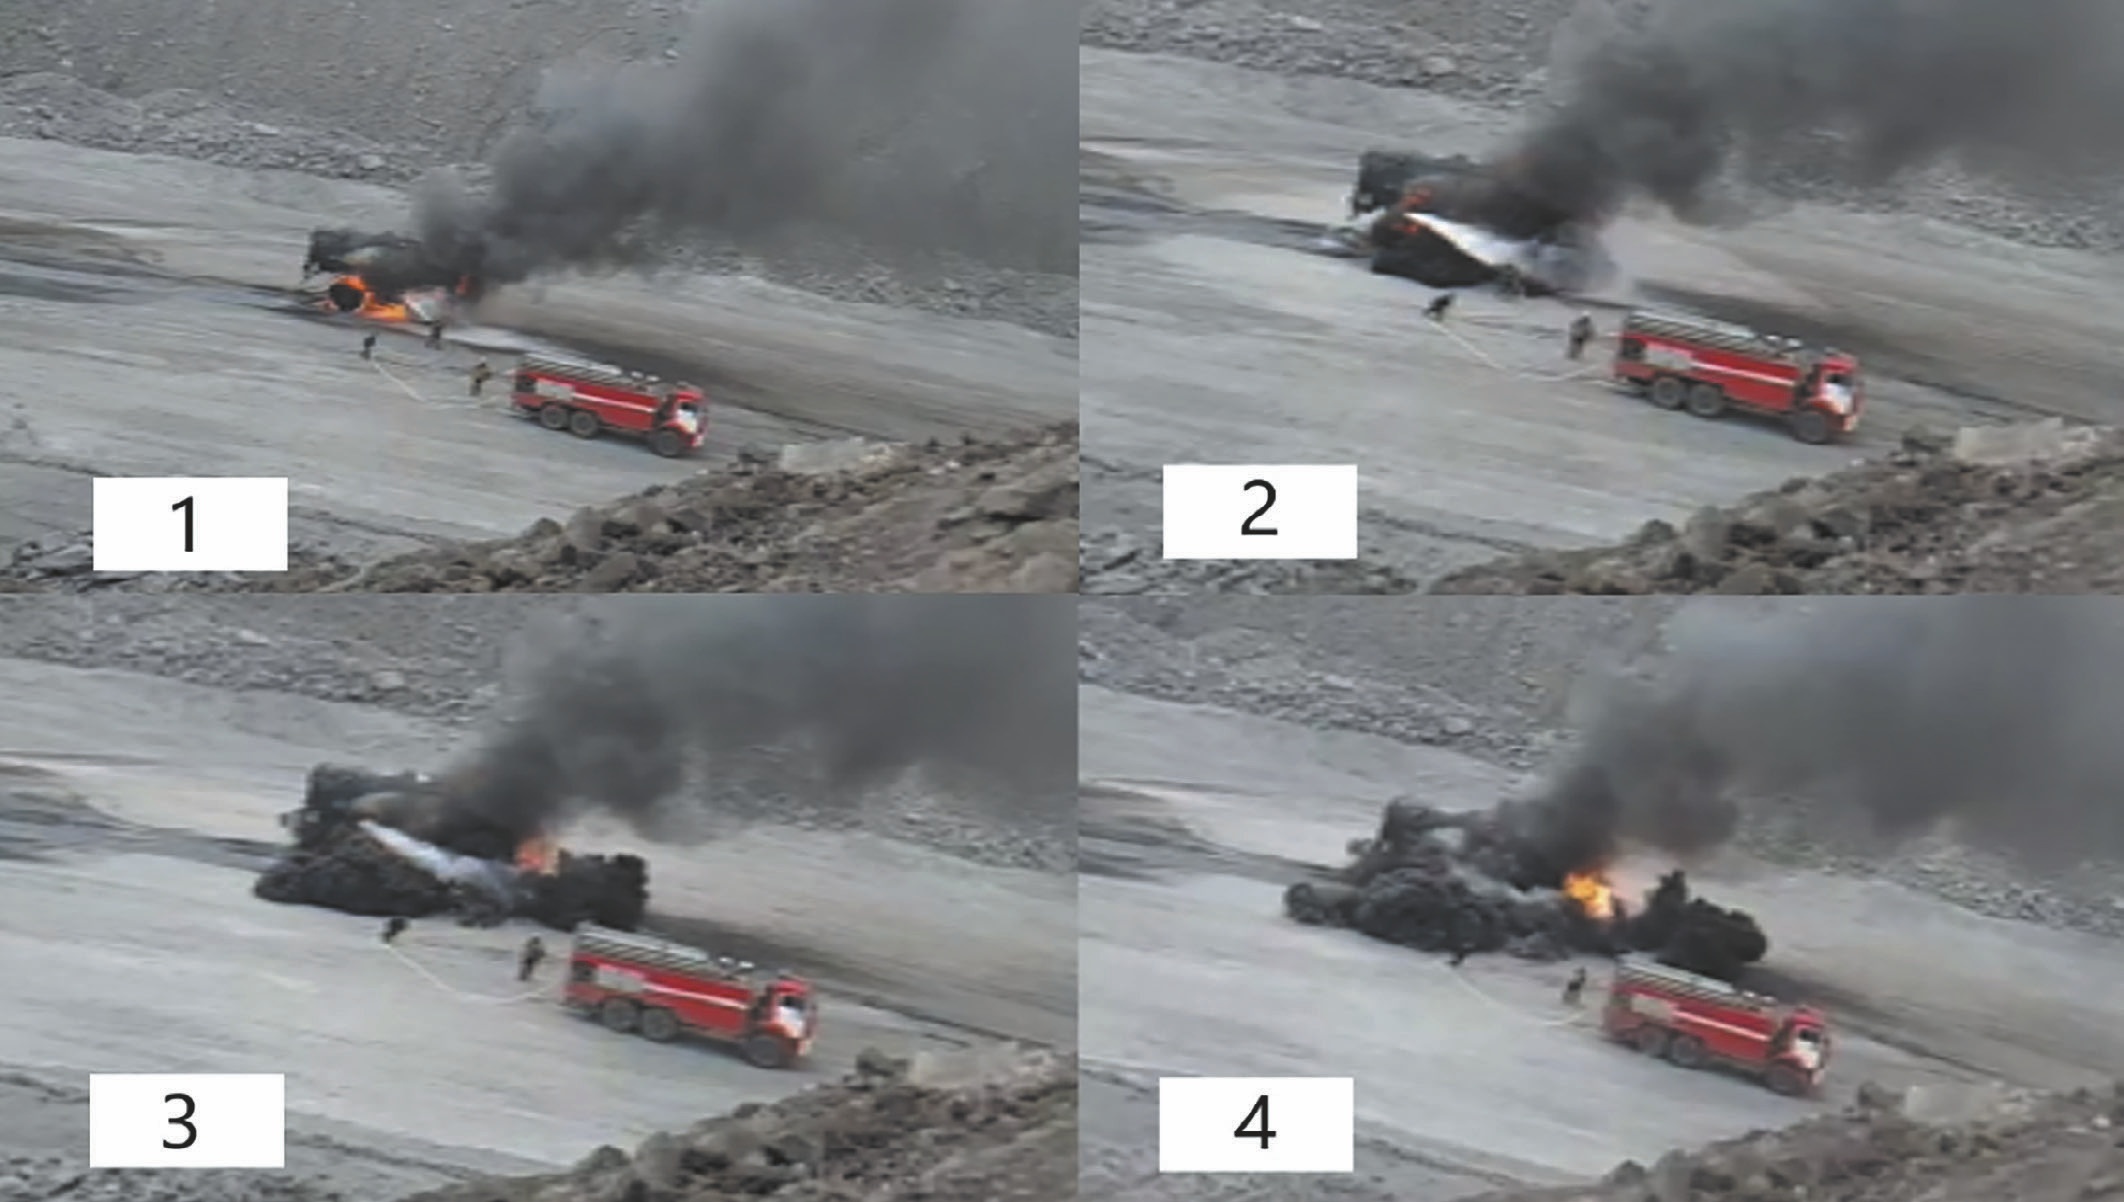 Рис. 4 Раскадровка взрыва колеса на карьере Fig. 4 Storyboard of a tyre explosion in an open pit